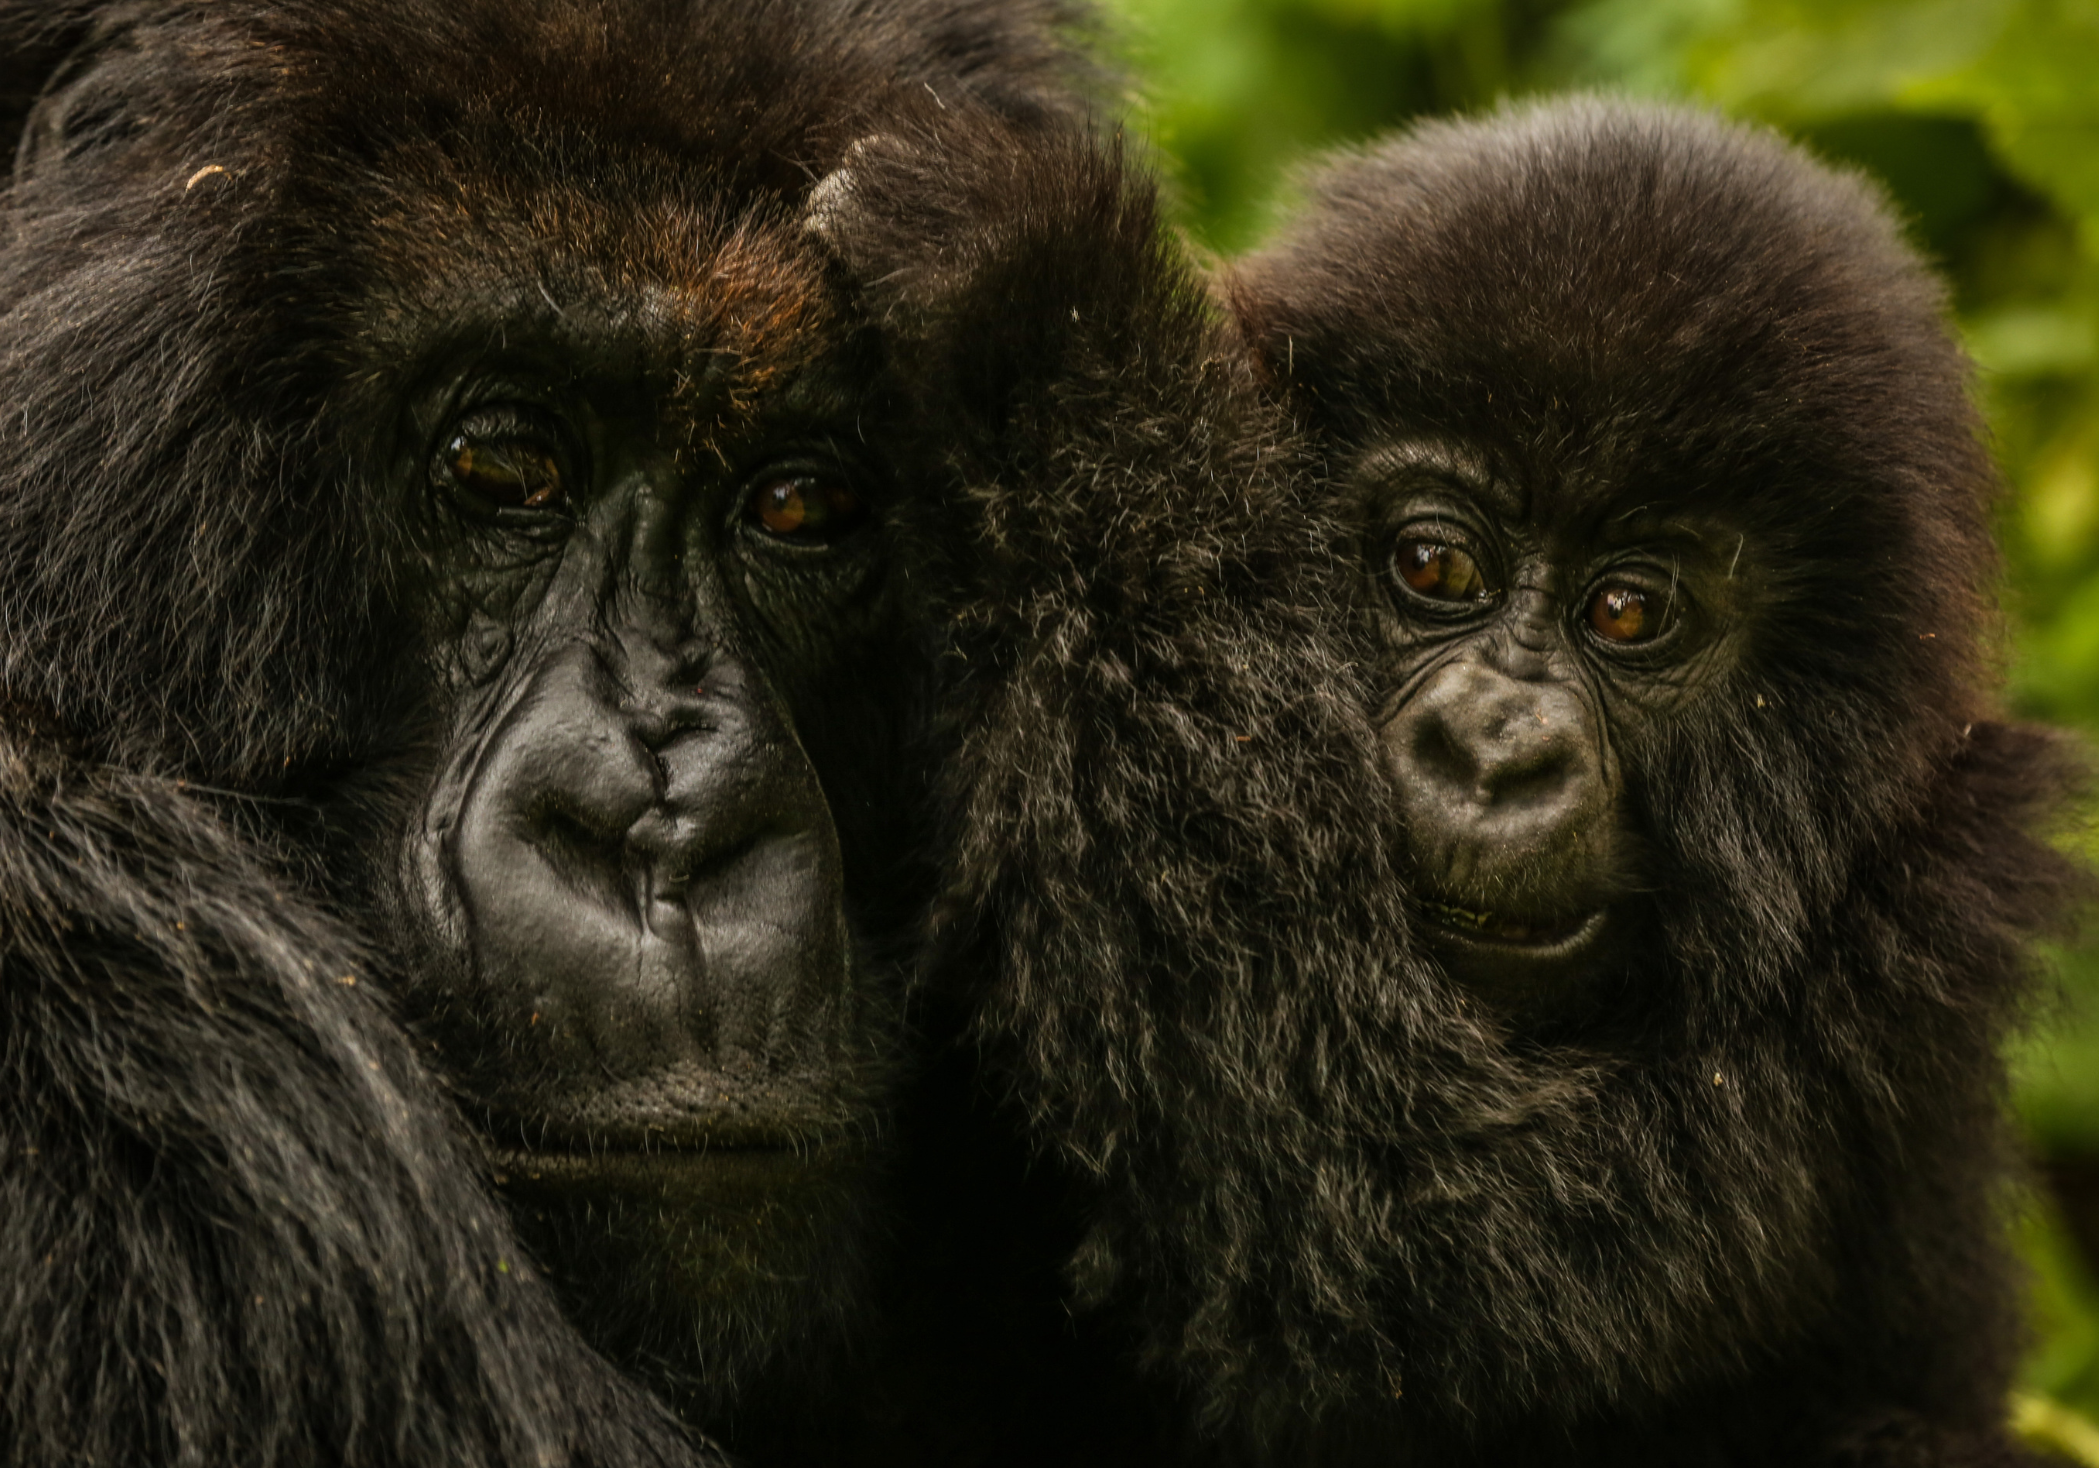 Mother with baby gorilla - visit Rwanda